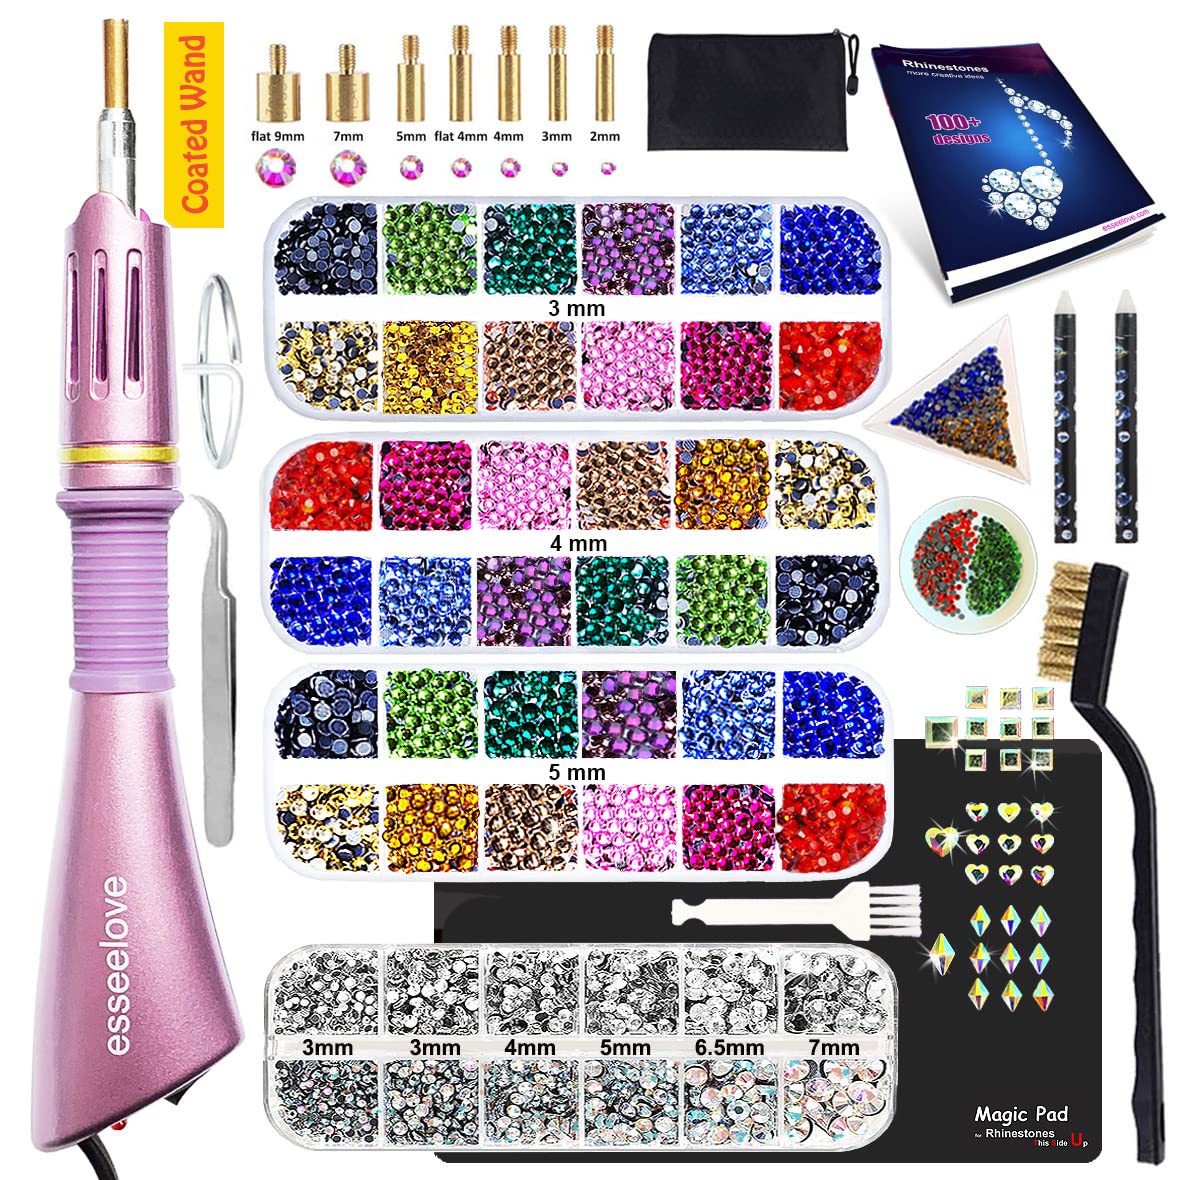 Bedazzler Kit with Rhinestones, Hot Fixed Gems Craft Applicator - Diamond  Painting Pen, Wax Pencil, Tweezers, Tray, Cleaning Brush, Picker  Rhinestones